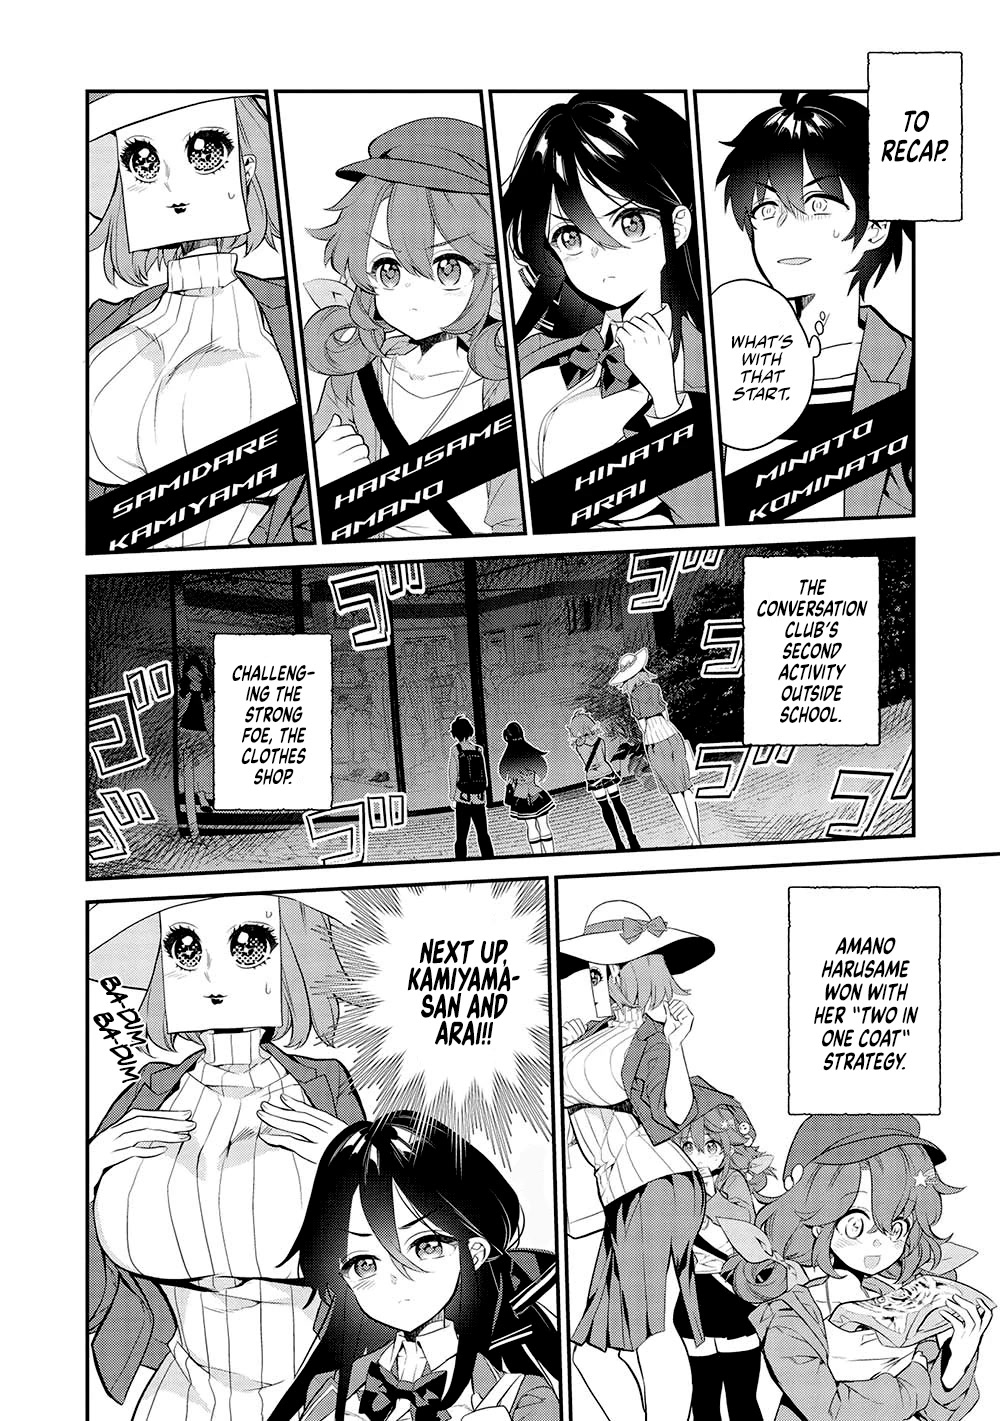 What's Under Kamiyama-San's Paper Bag? - Page 3